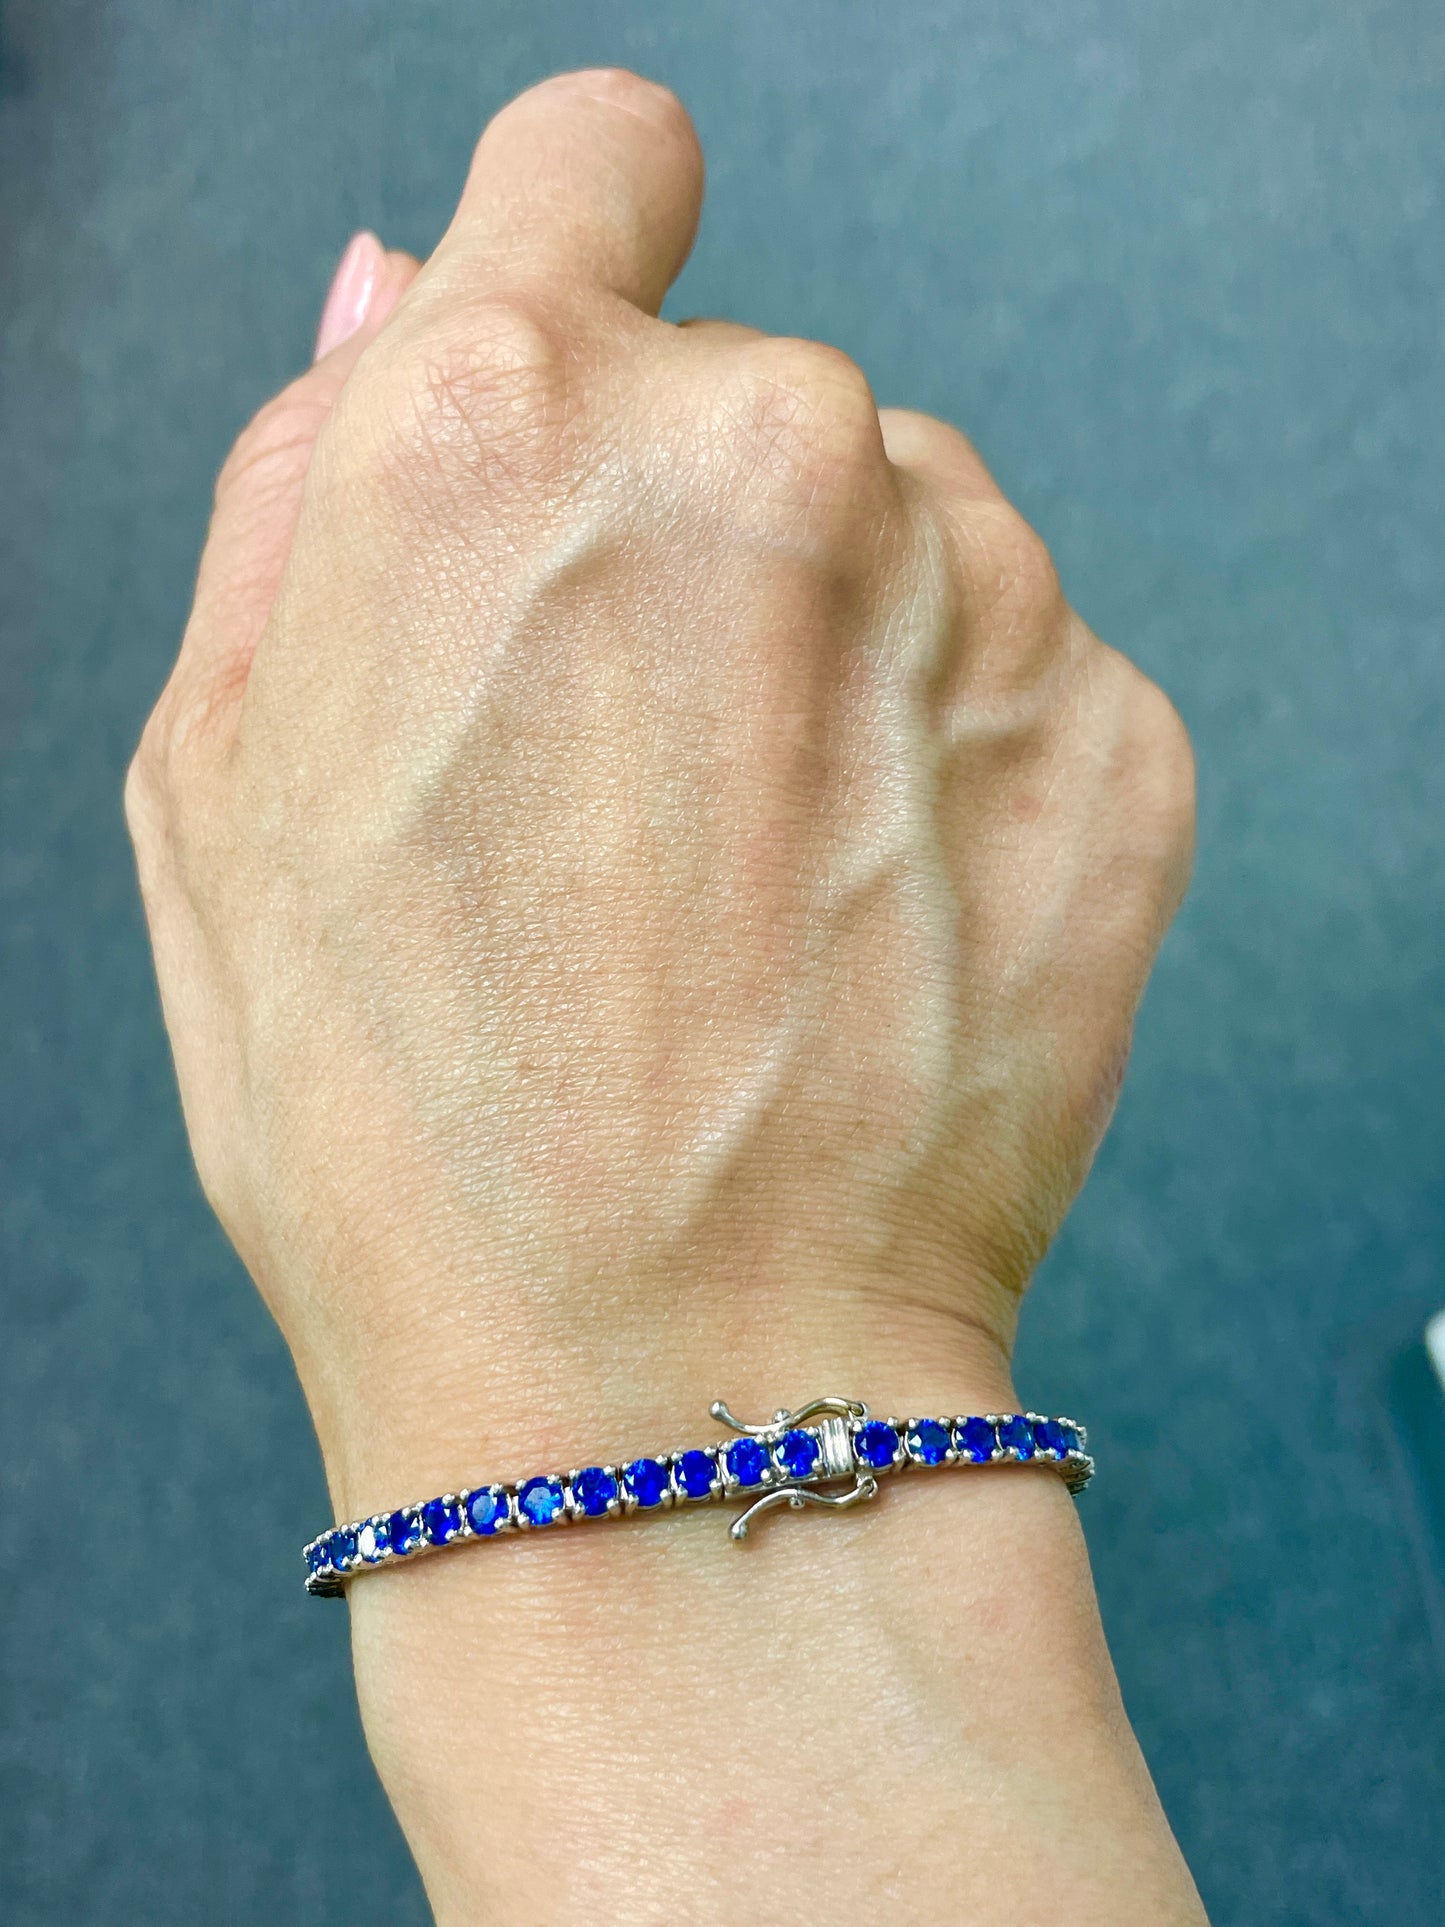 6.28 Carat Blue Sapphire Tennis Bracelet - 14k White Gold